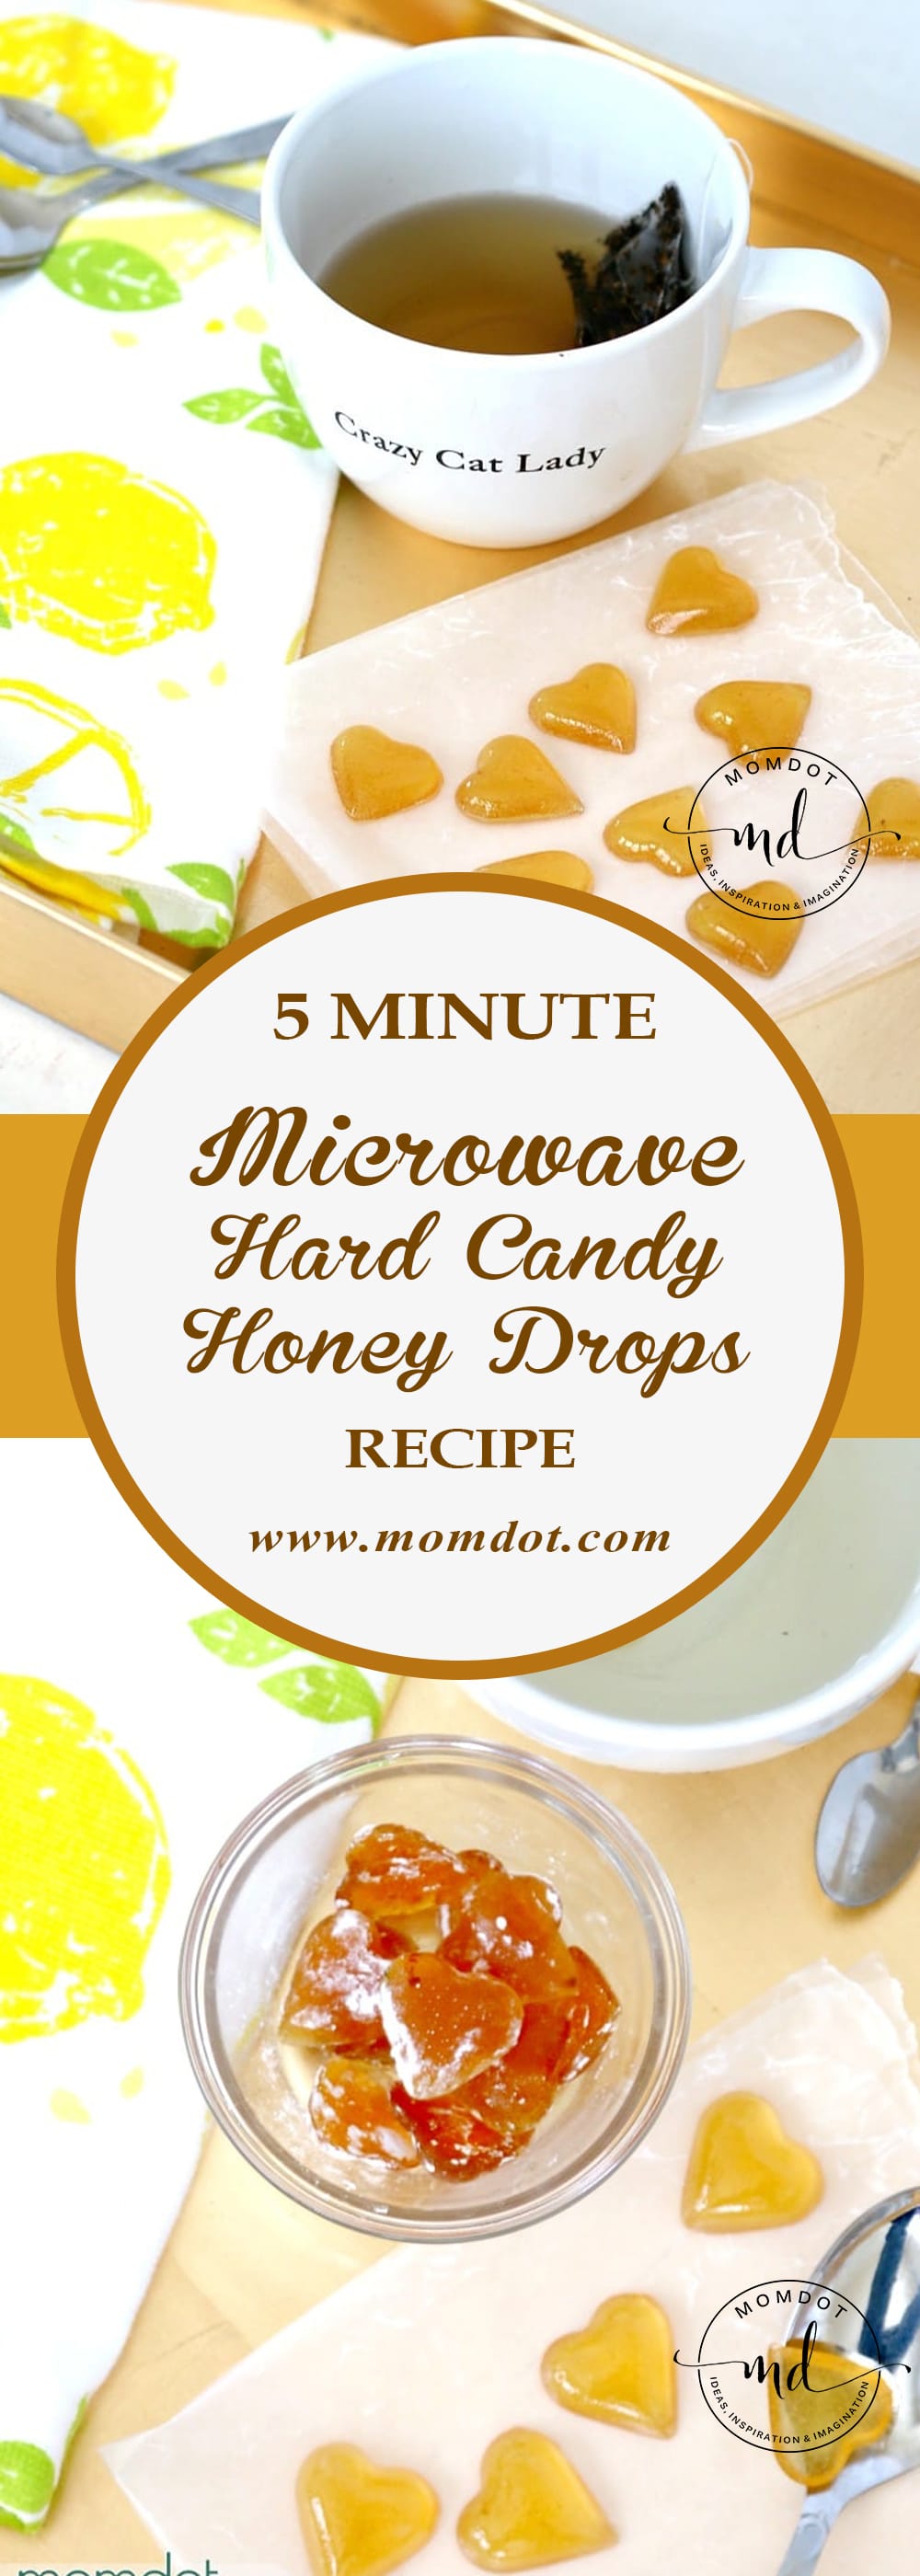 Honey Drops Recipe: 5-Minute Microwave Honey Drops for Tea! - MomDot